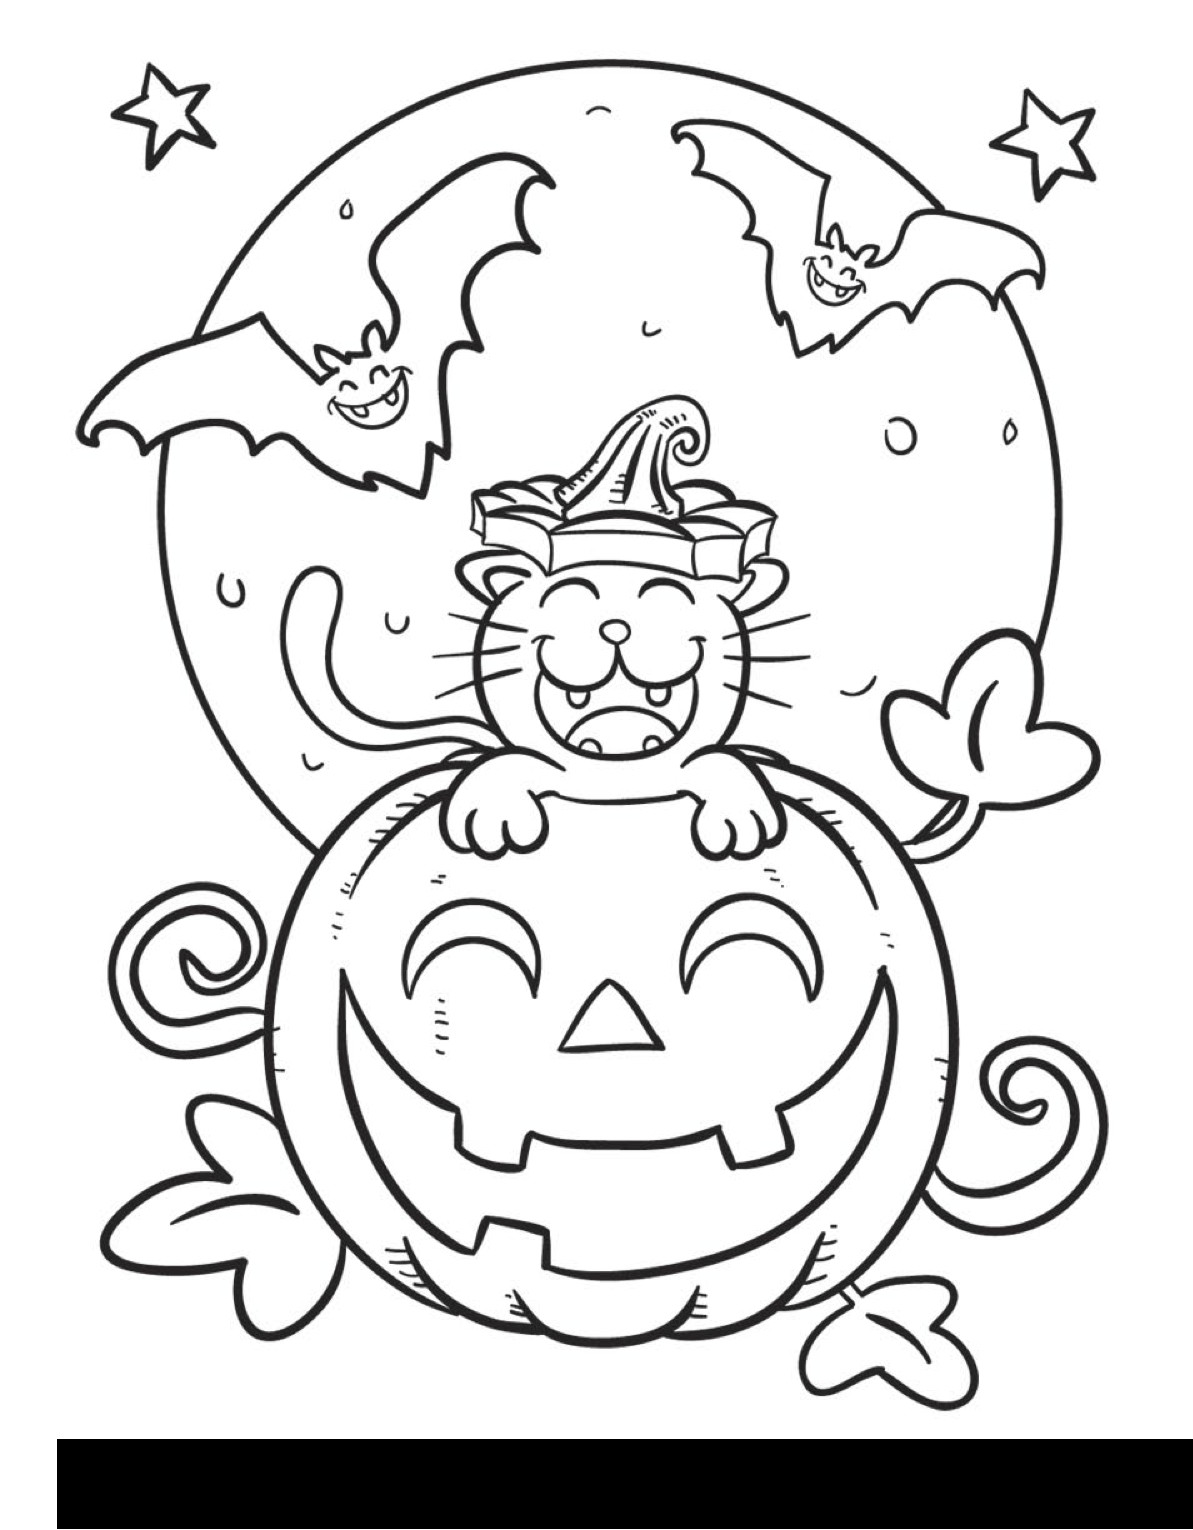 Halloween Coloring Pages For Toddlers
 Cantinho do Primeiro Ciclo Desenhos de Halloween para pintar